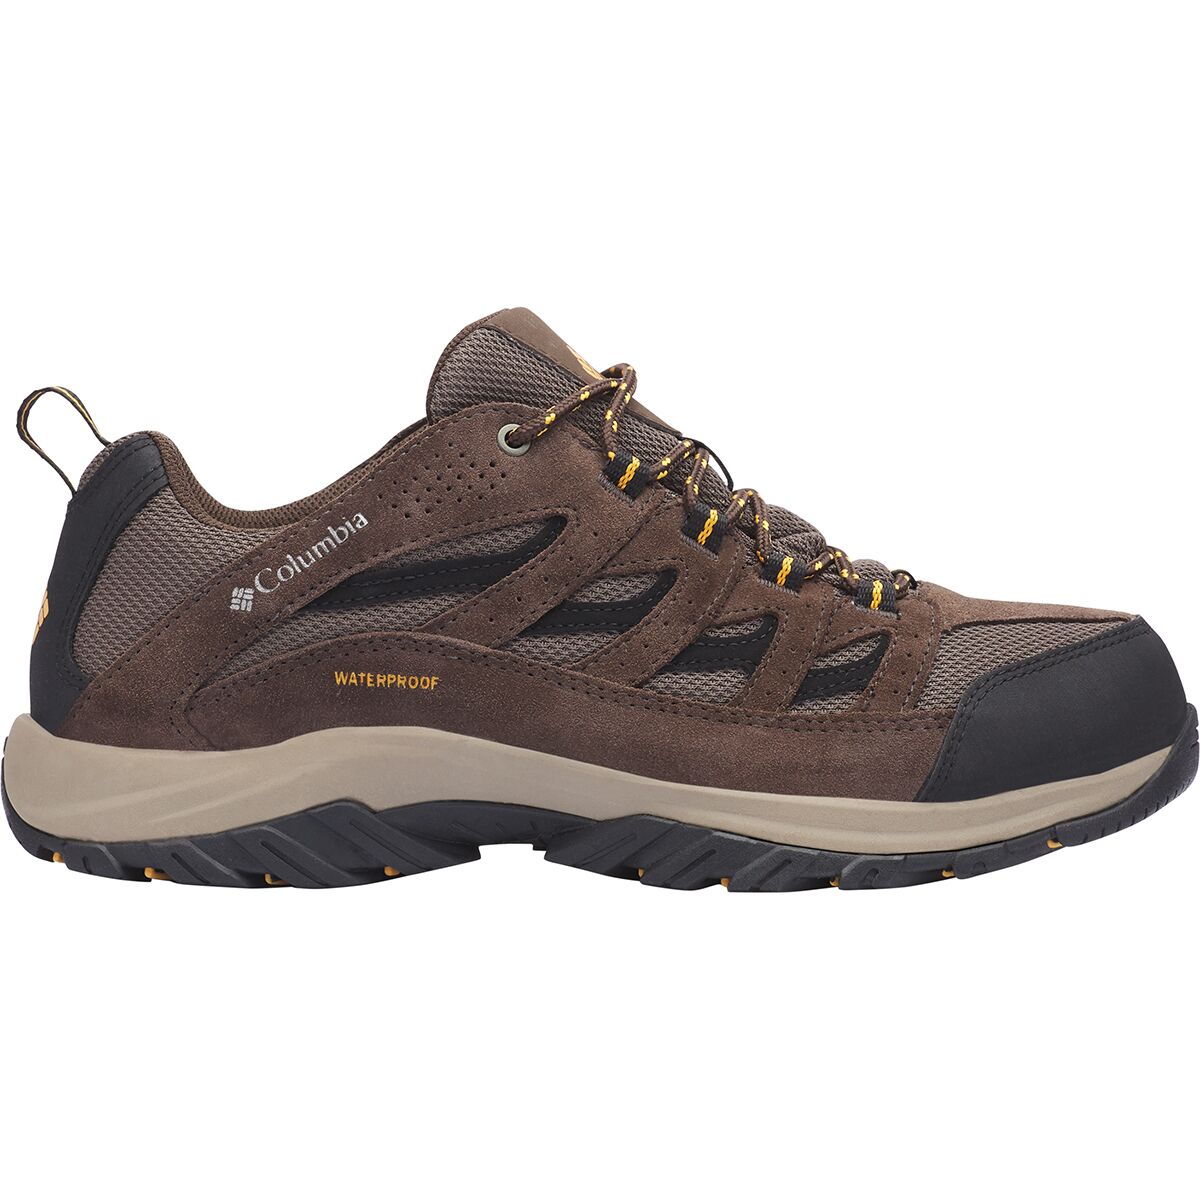 Crestwood Waterproof Hiking Shoe - Men